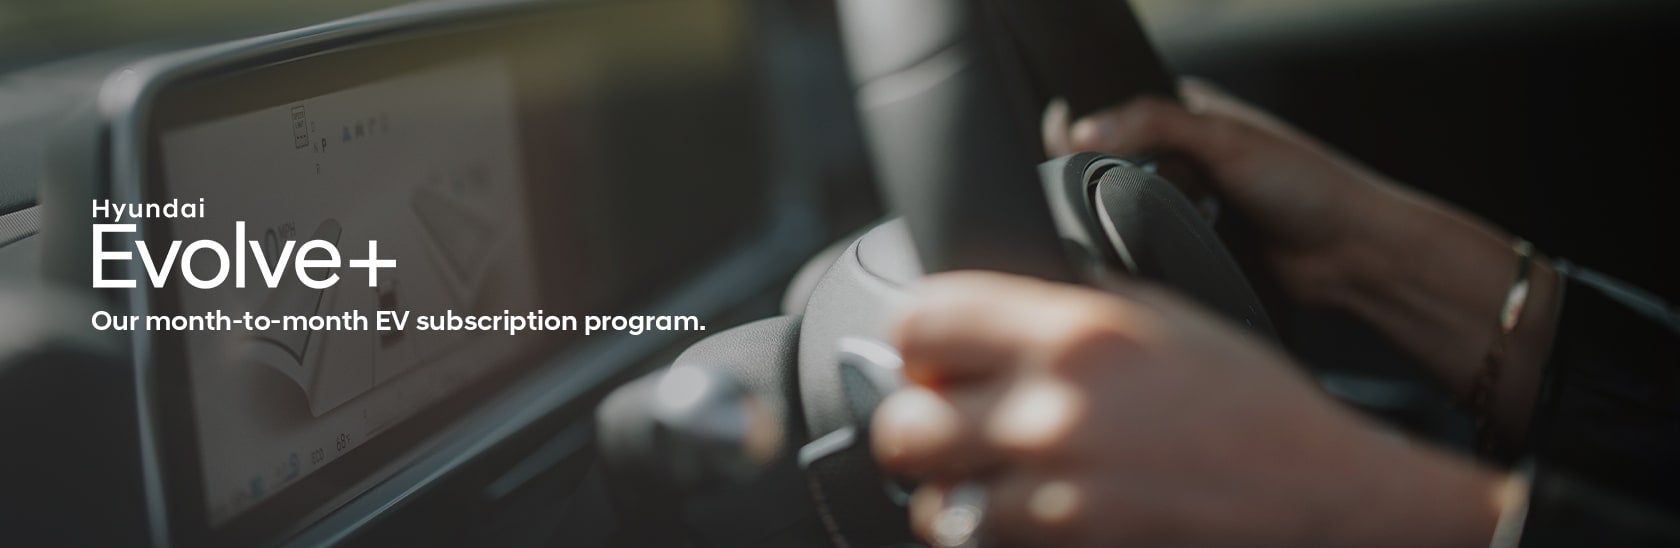 Hyundai Evolve+ Our month-to-month EV subscription program | Hyundai of San Bruno in San Bruno CA